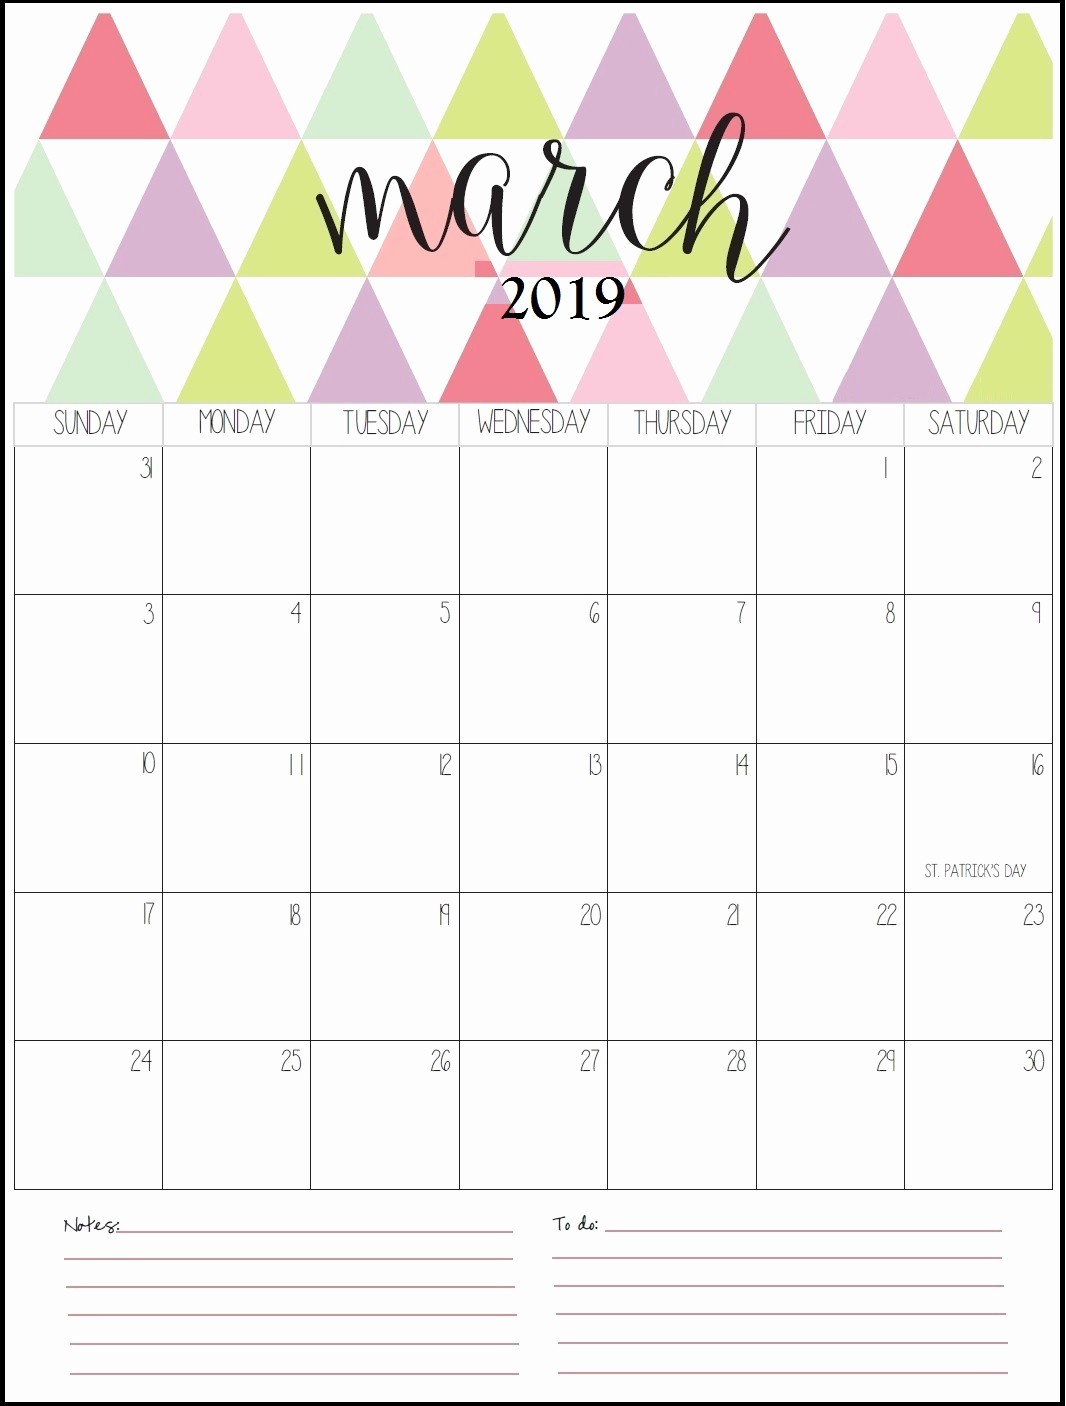 2019 Printable Calendar by Month Lovely Monthly Printable Calendar 2019